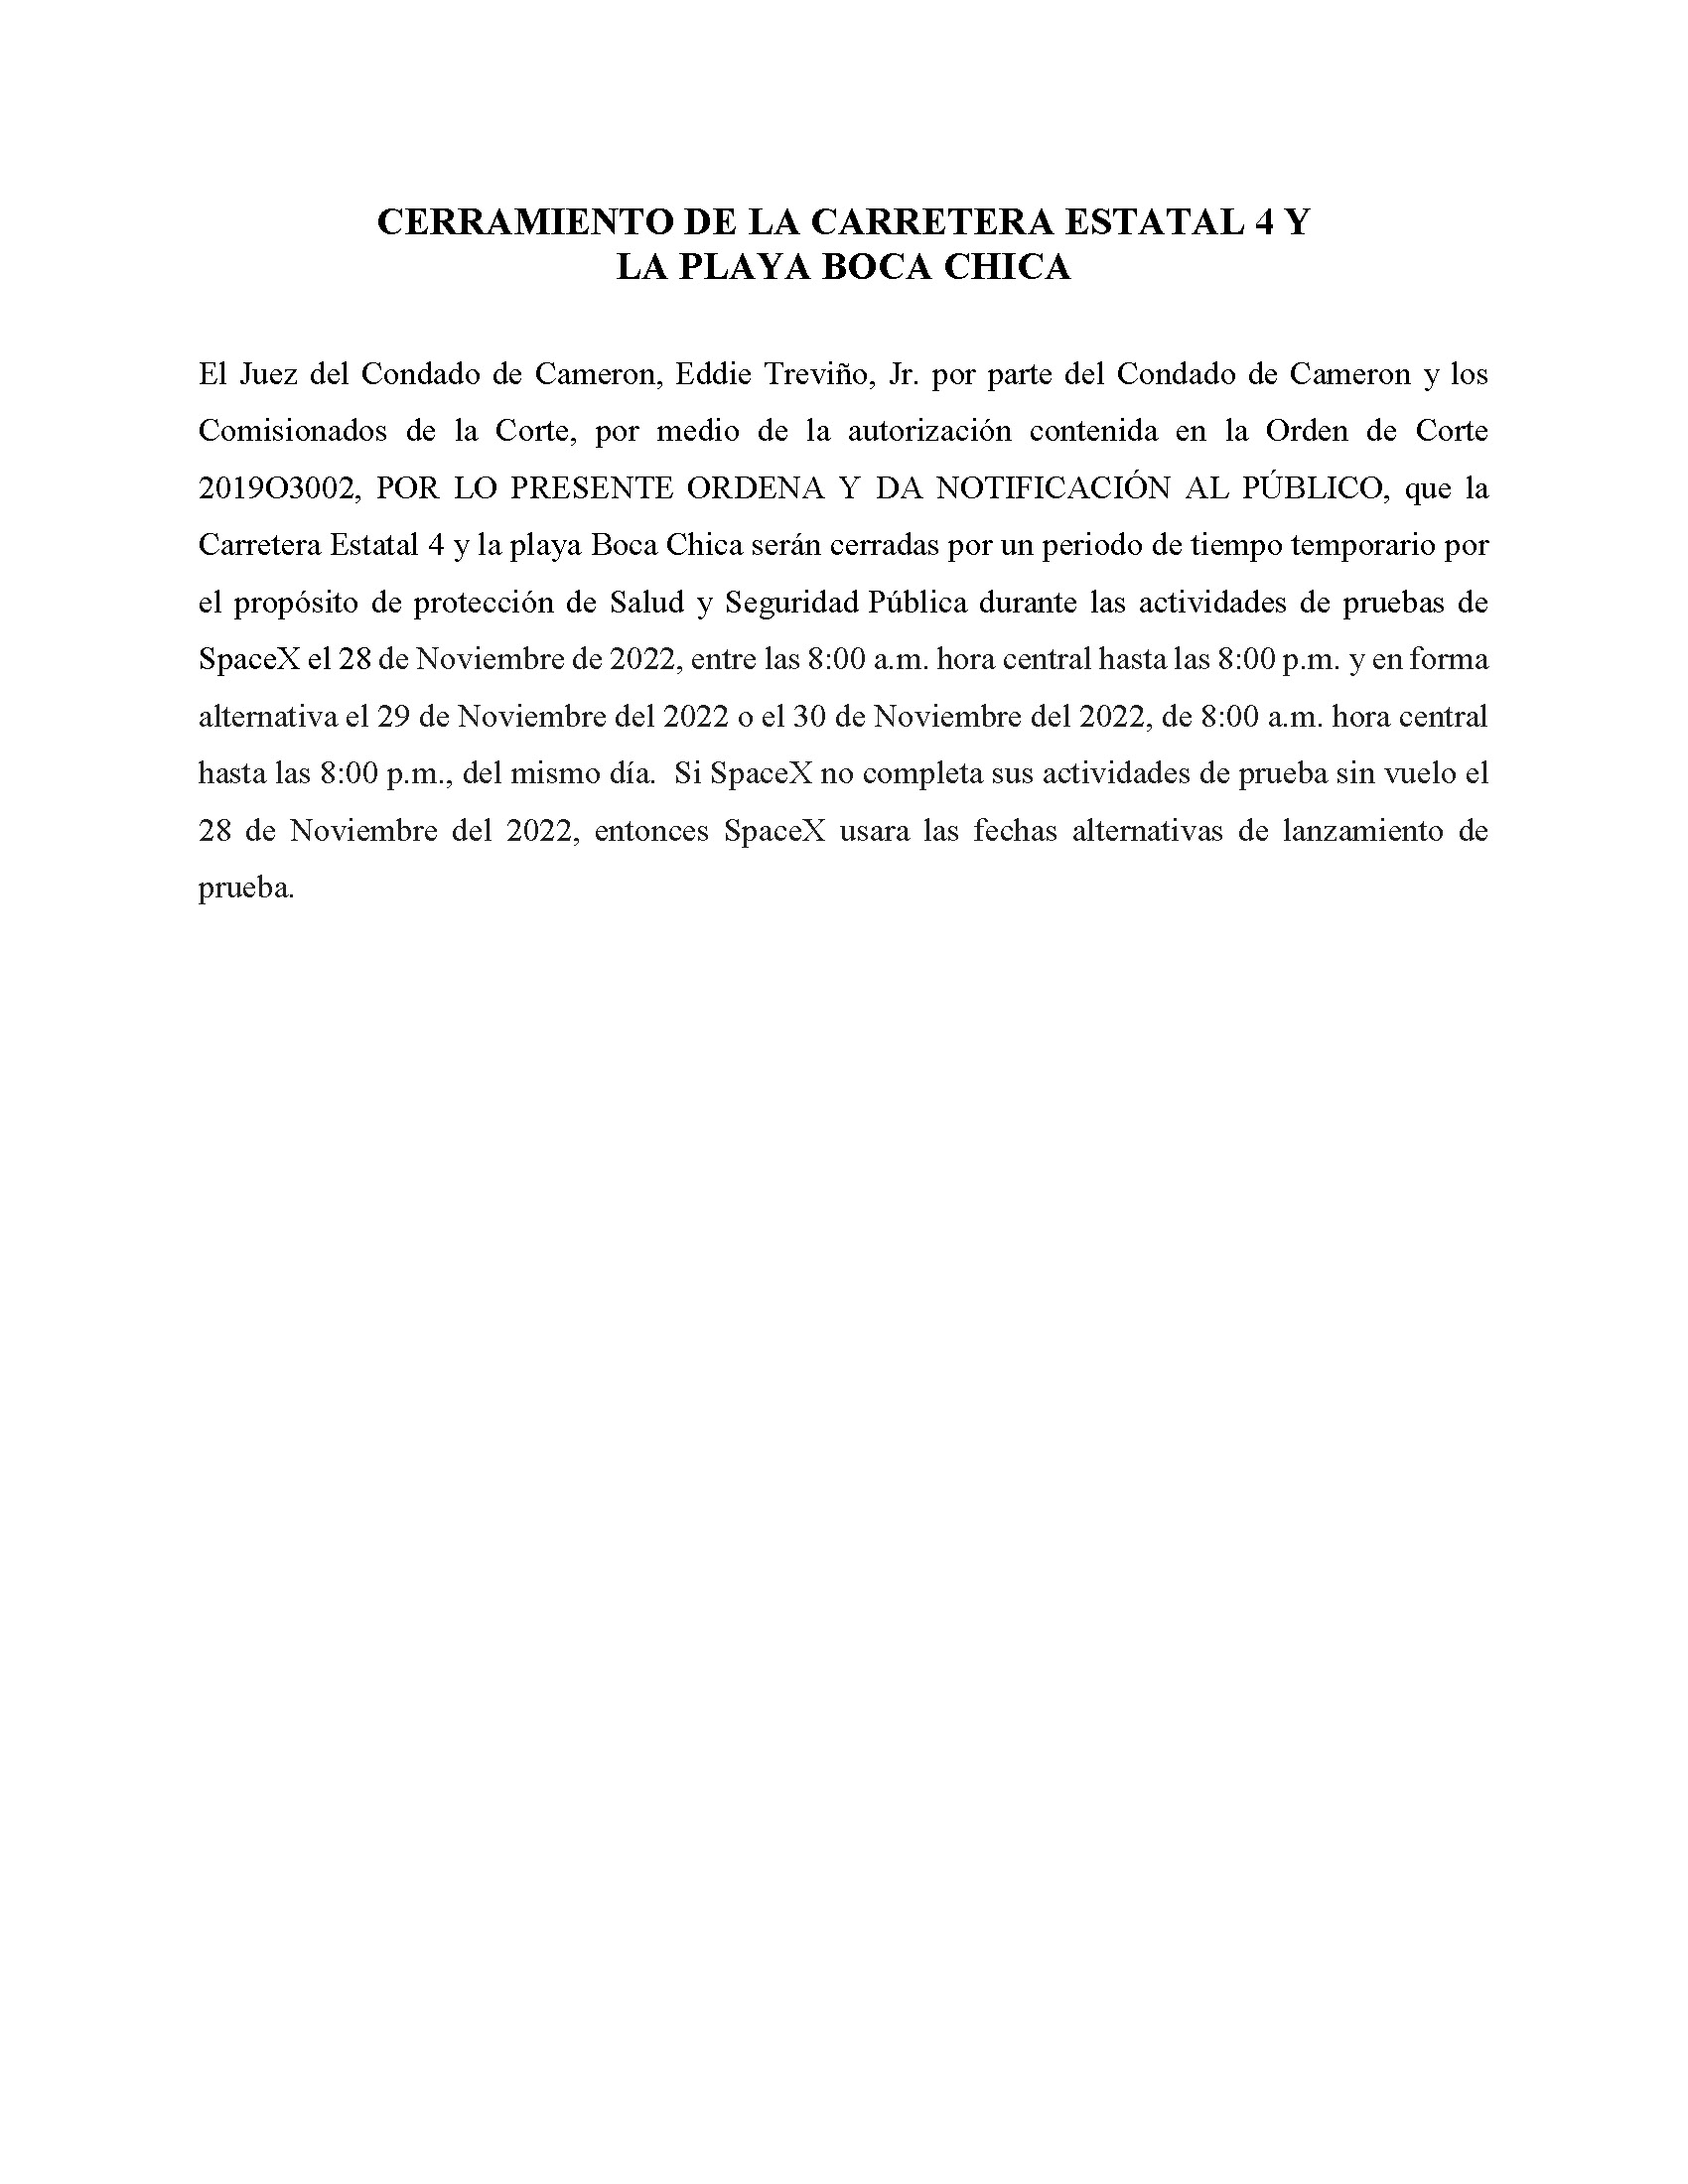 ORDER.CLOSURE OF HIGHWAY 4 Y LA PLAYA BOCA CHICA.SPANISH.11.28.2022